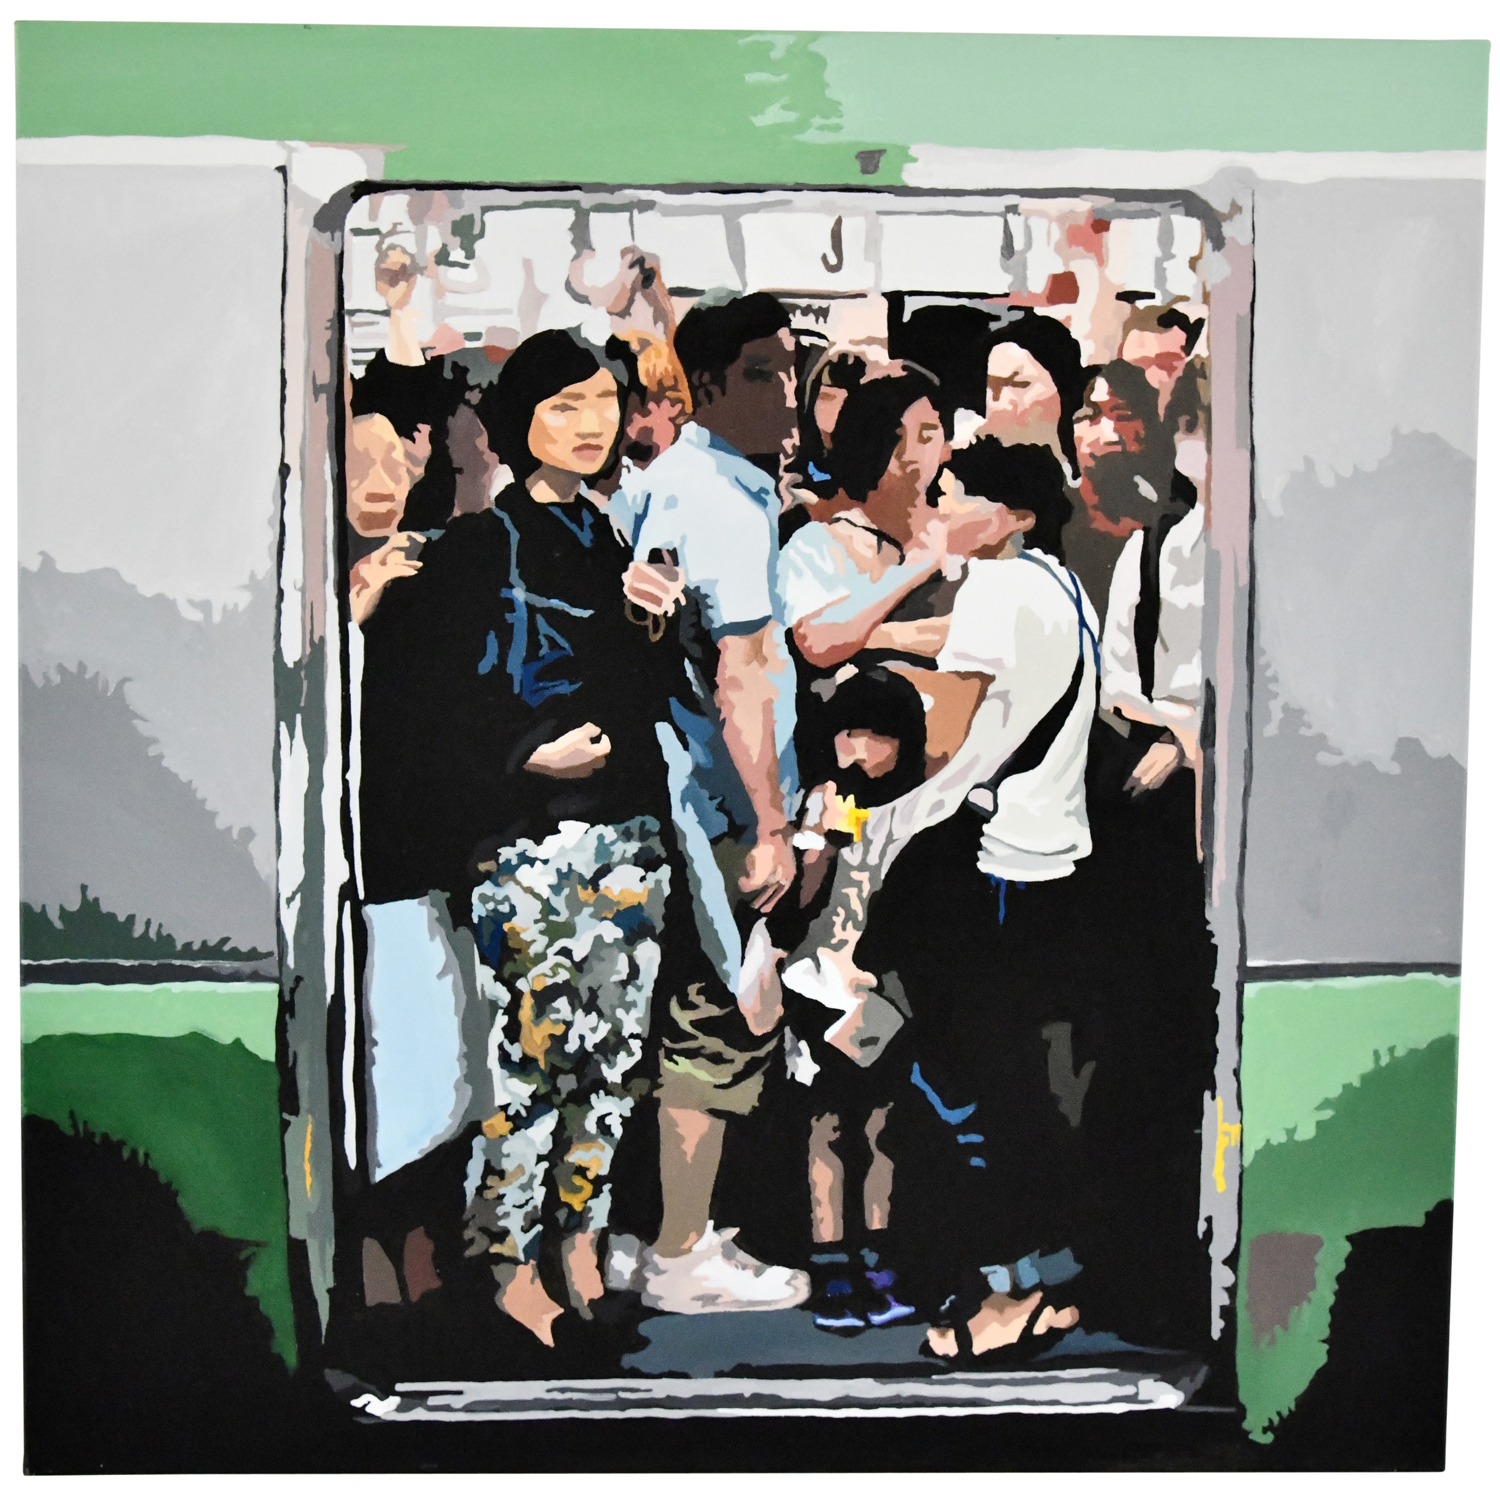 Carole Grandgirard Le metro painting - the subway